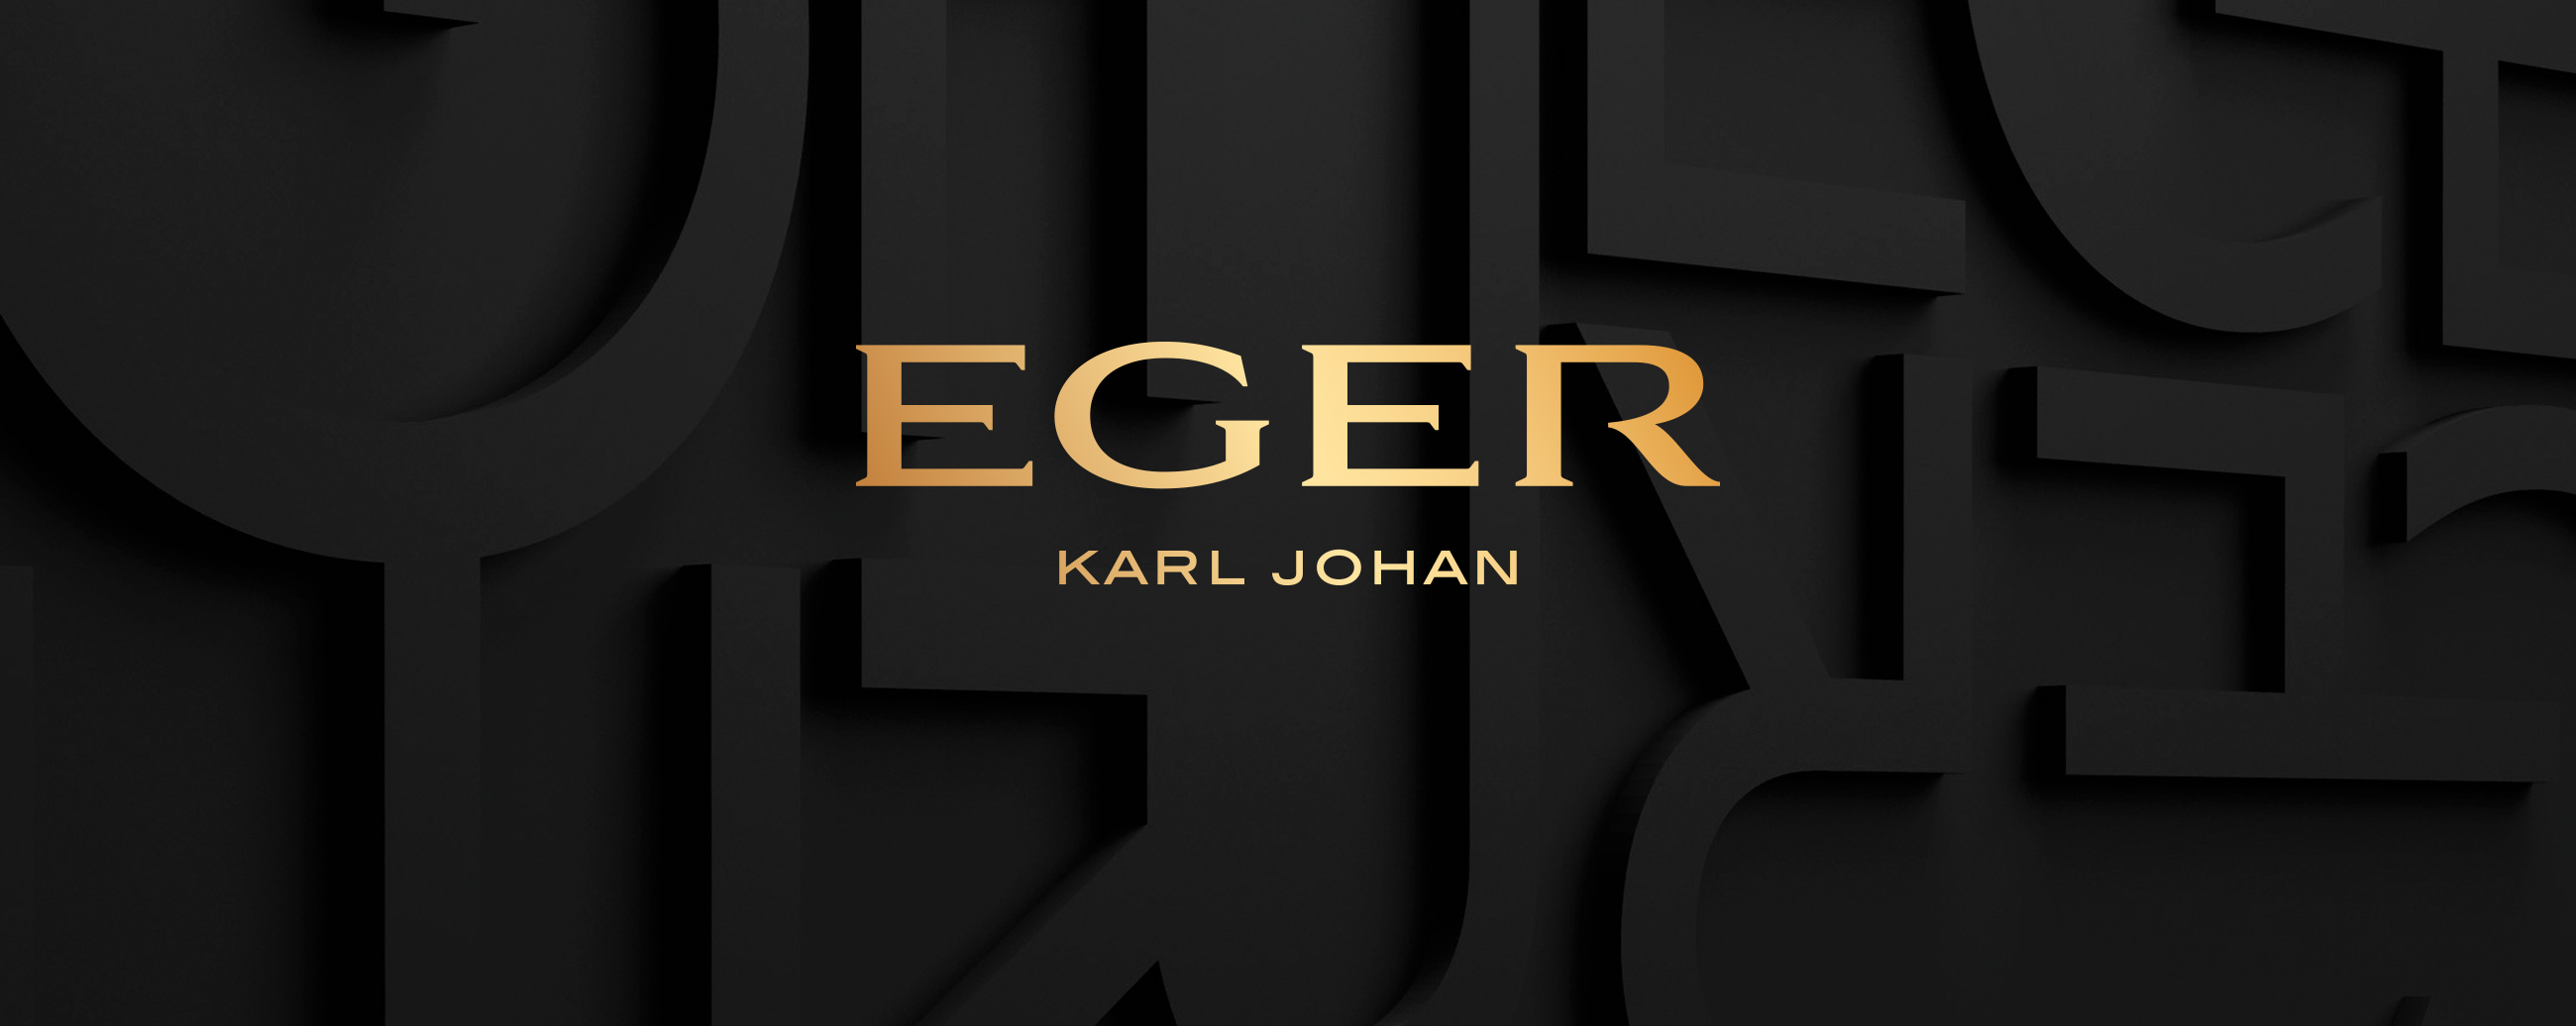 Eger Karl Johan logo. Visuell identitet visual identity.